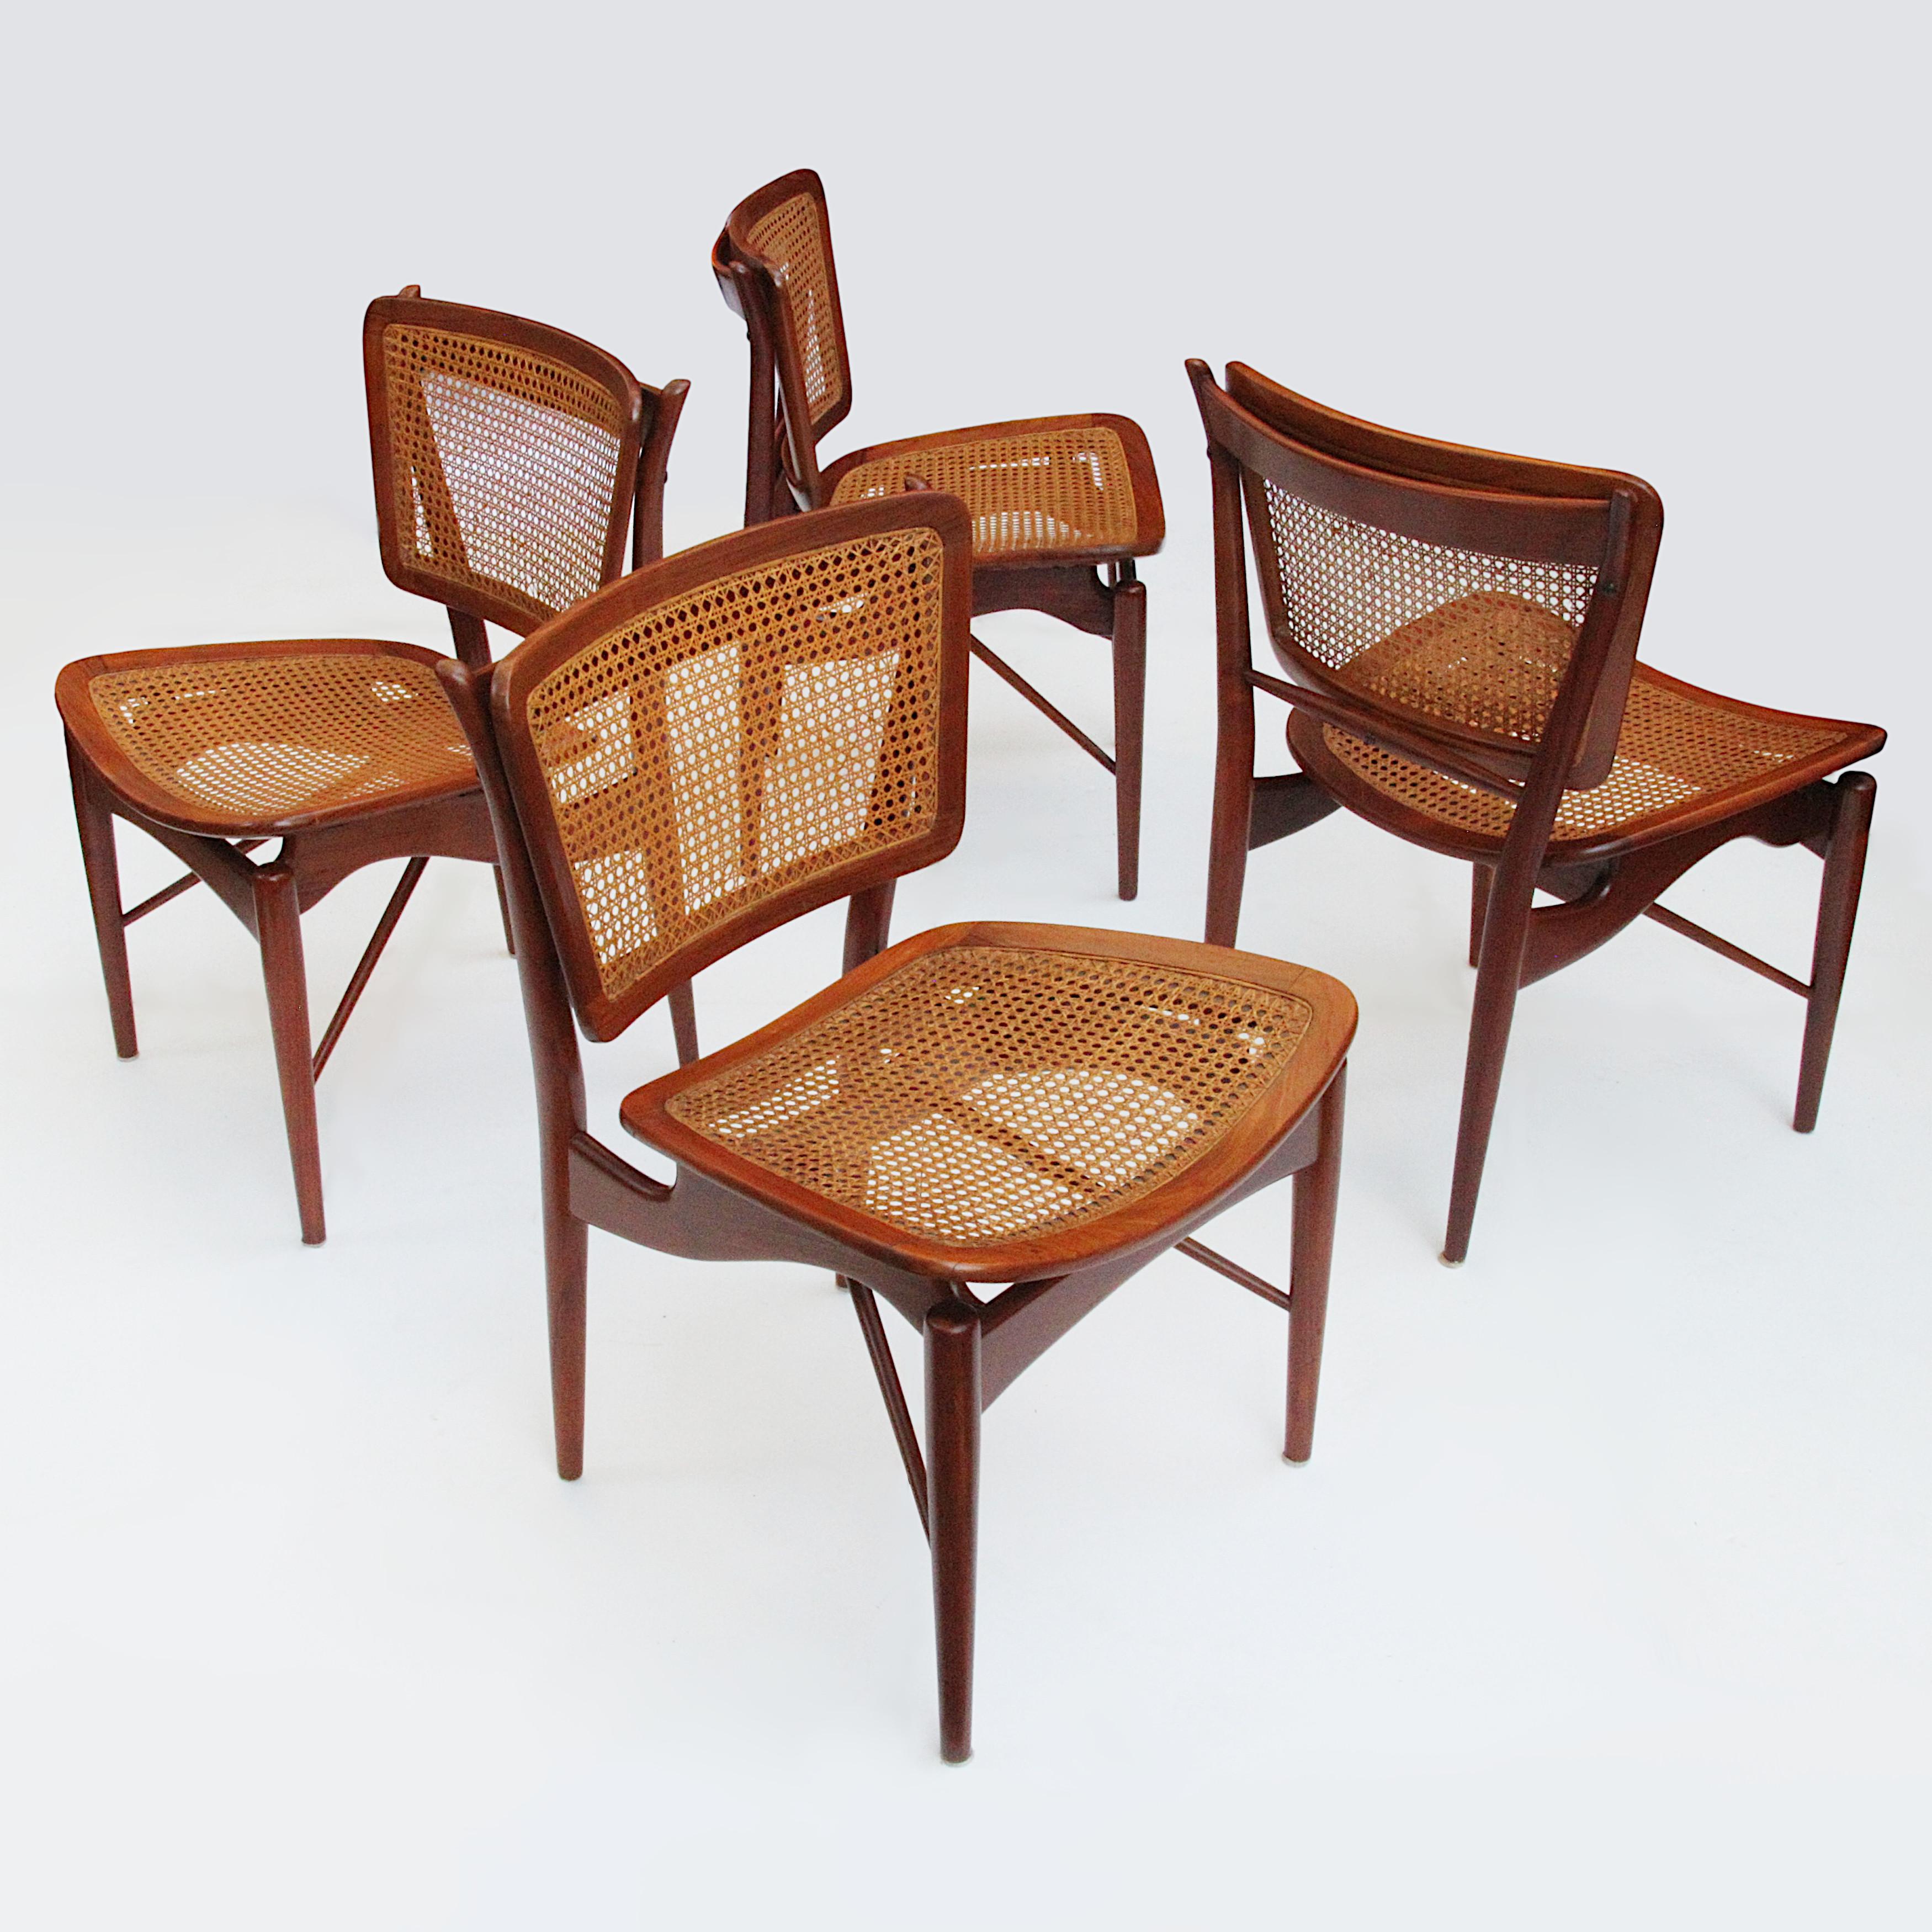 Mid-Century Modern Set of 4 Original Finn Juhl Model NV 51/403 Teak & Cane Dining Chairs by Baker